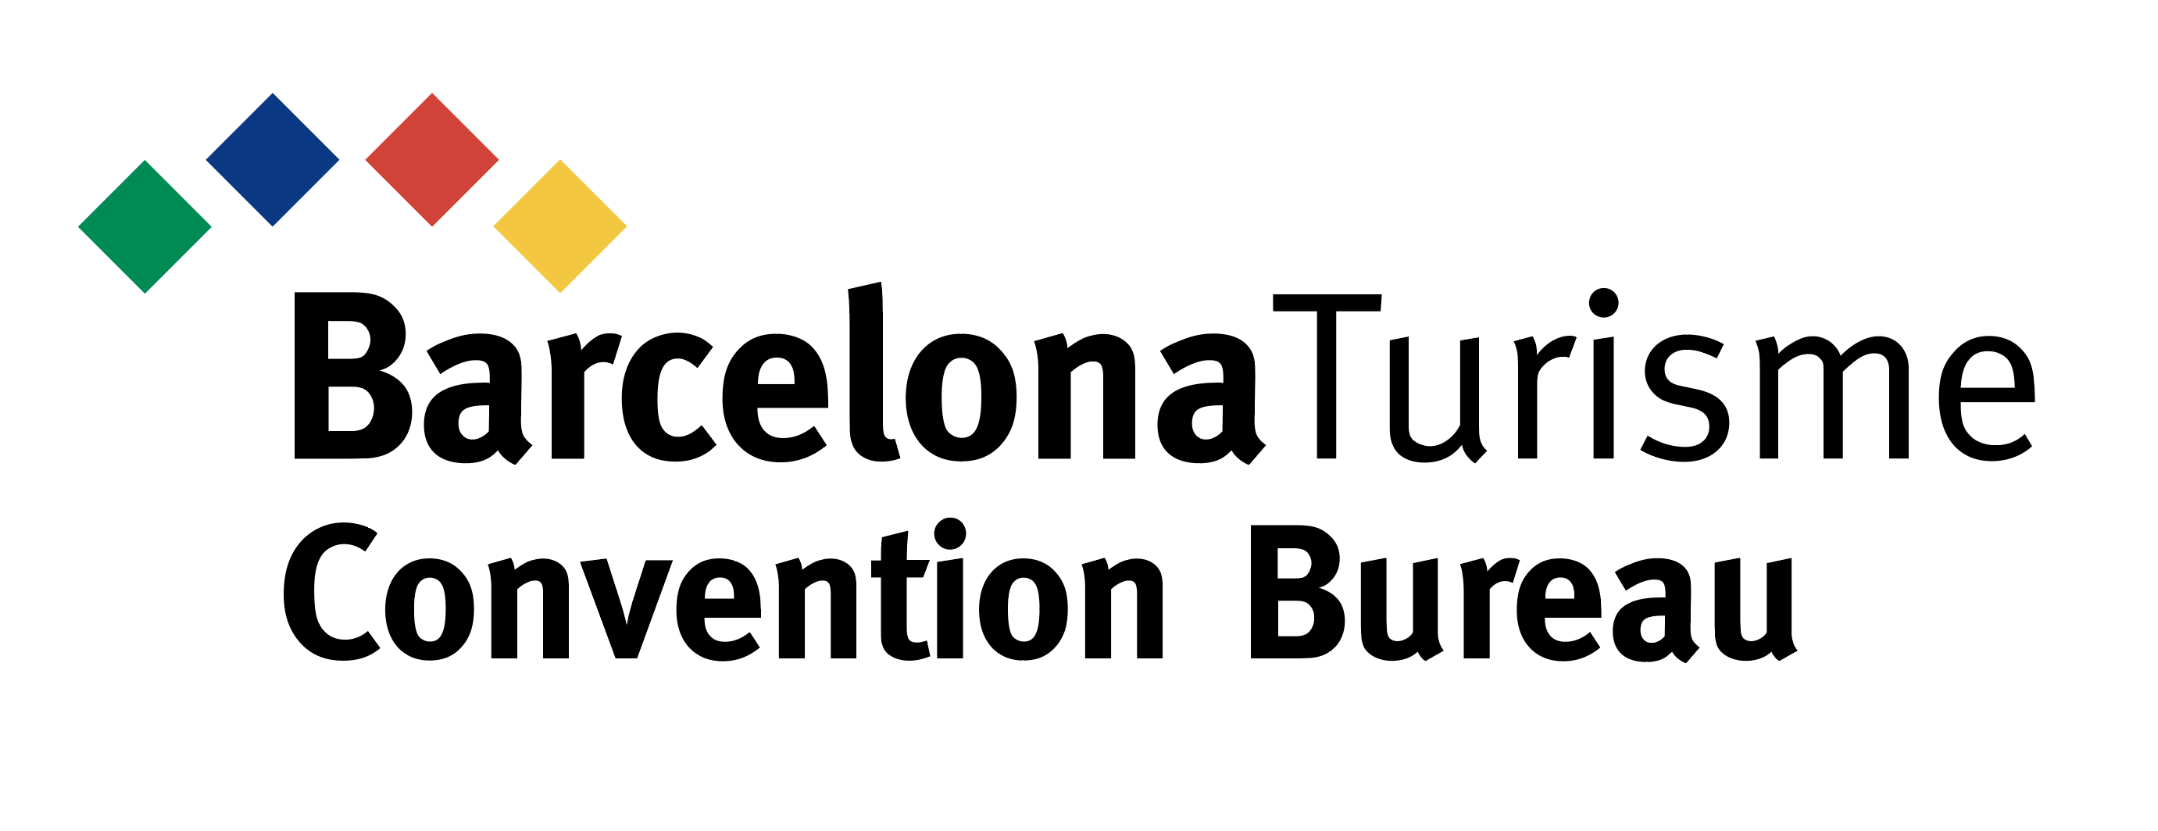 Barcelona Turismo Convention Bureau